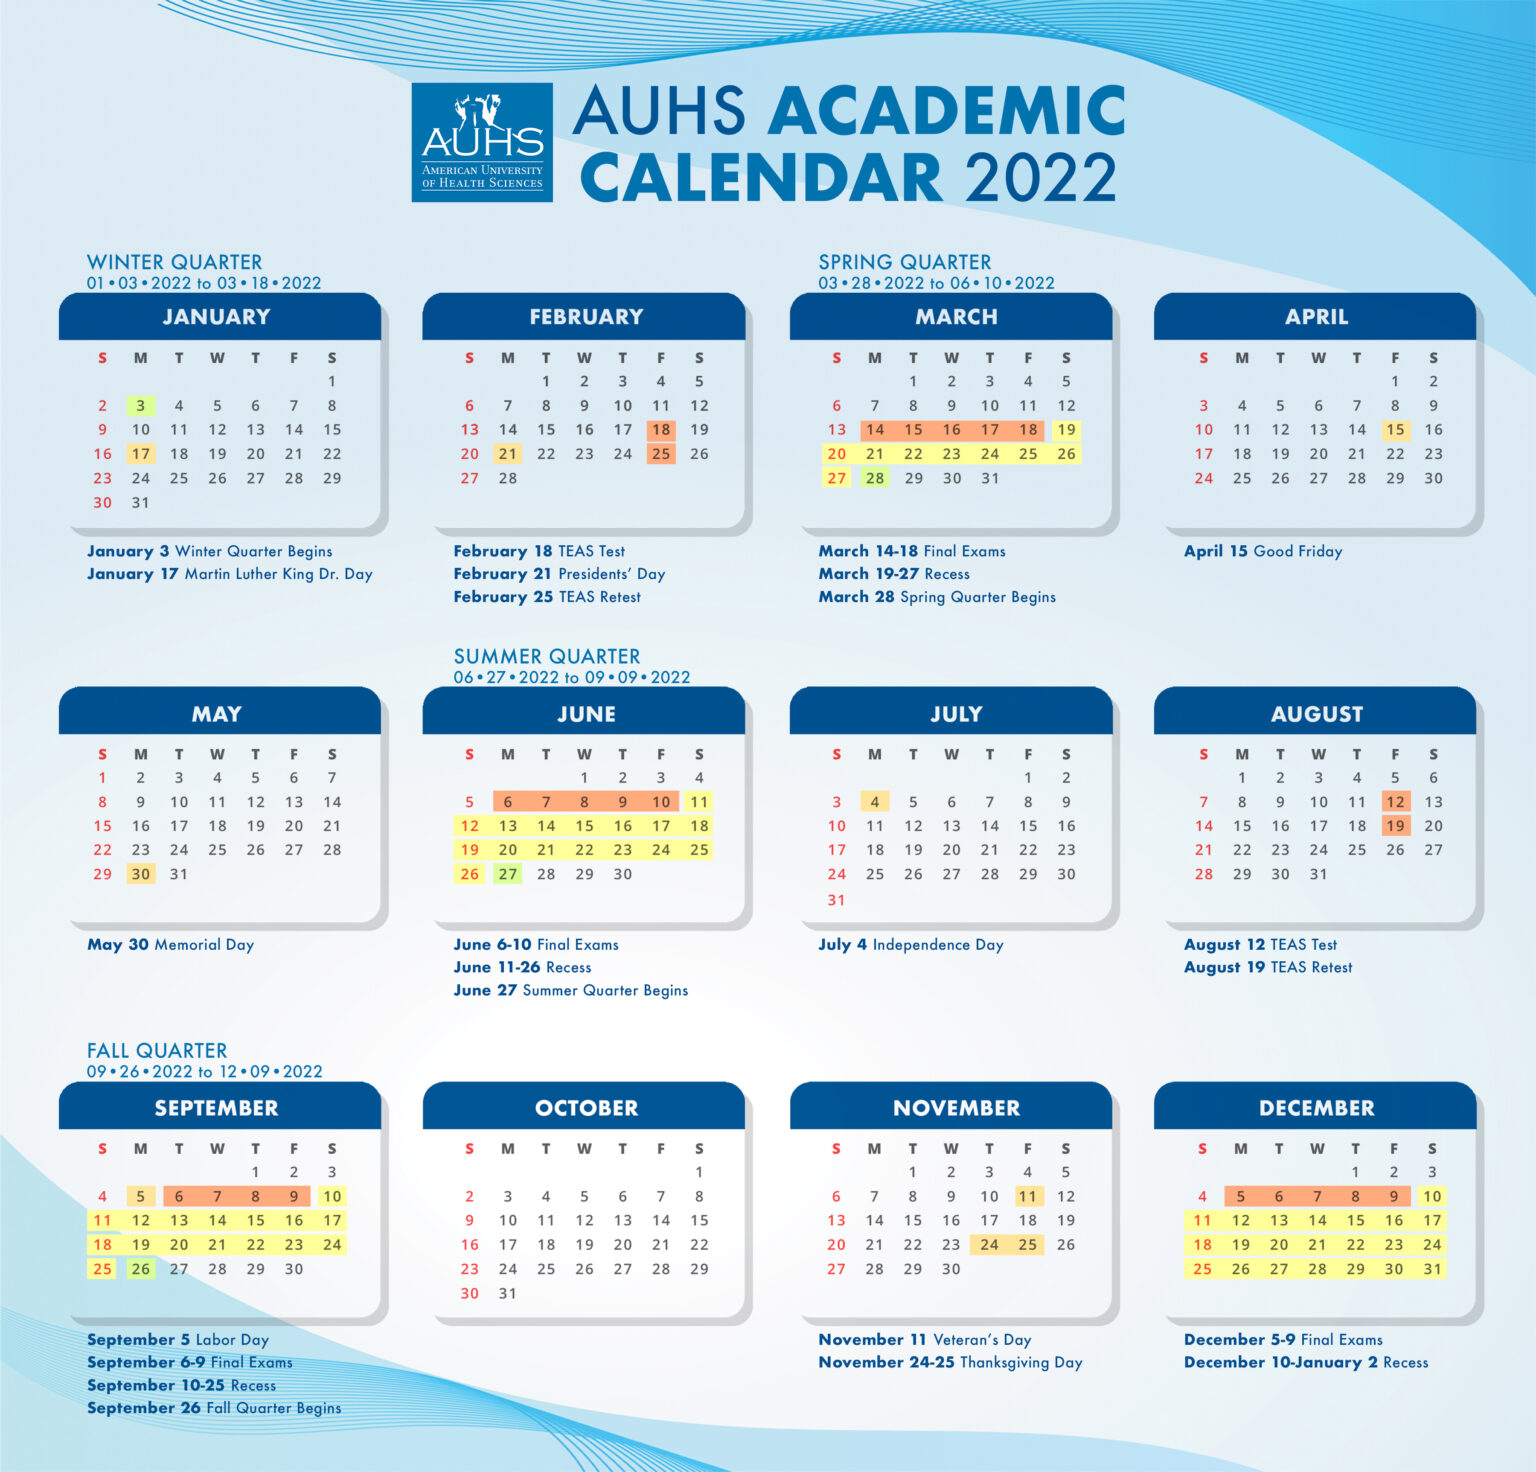 Academic Calendar > American University of Health Sciences